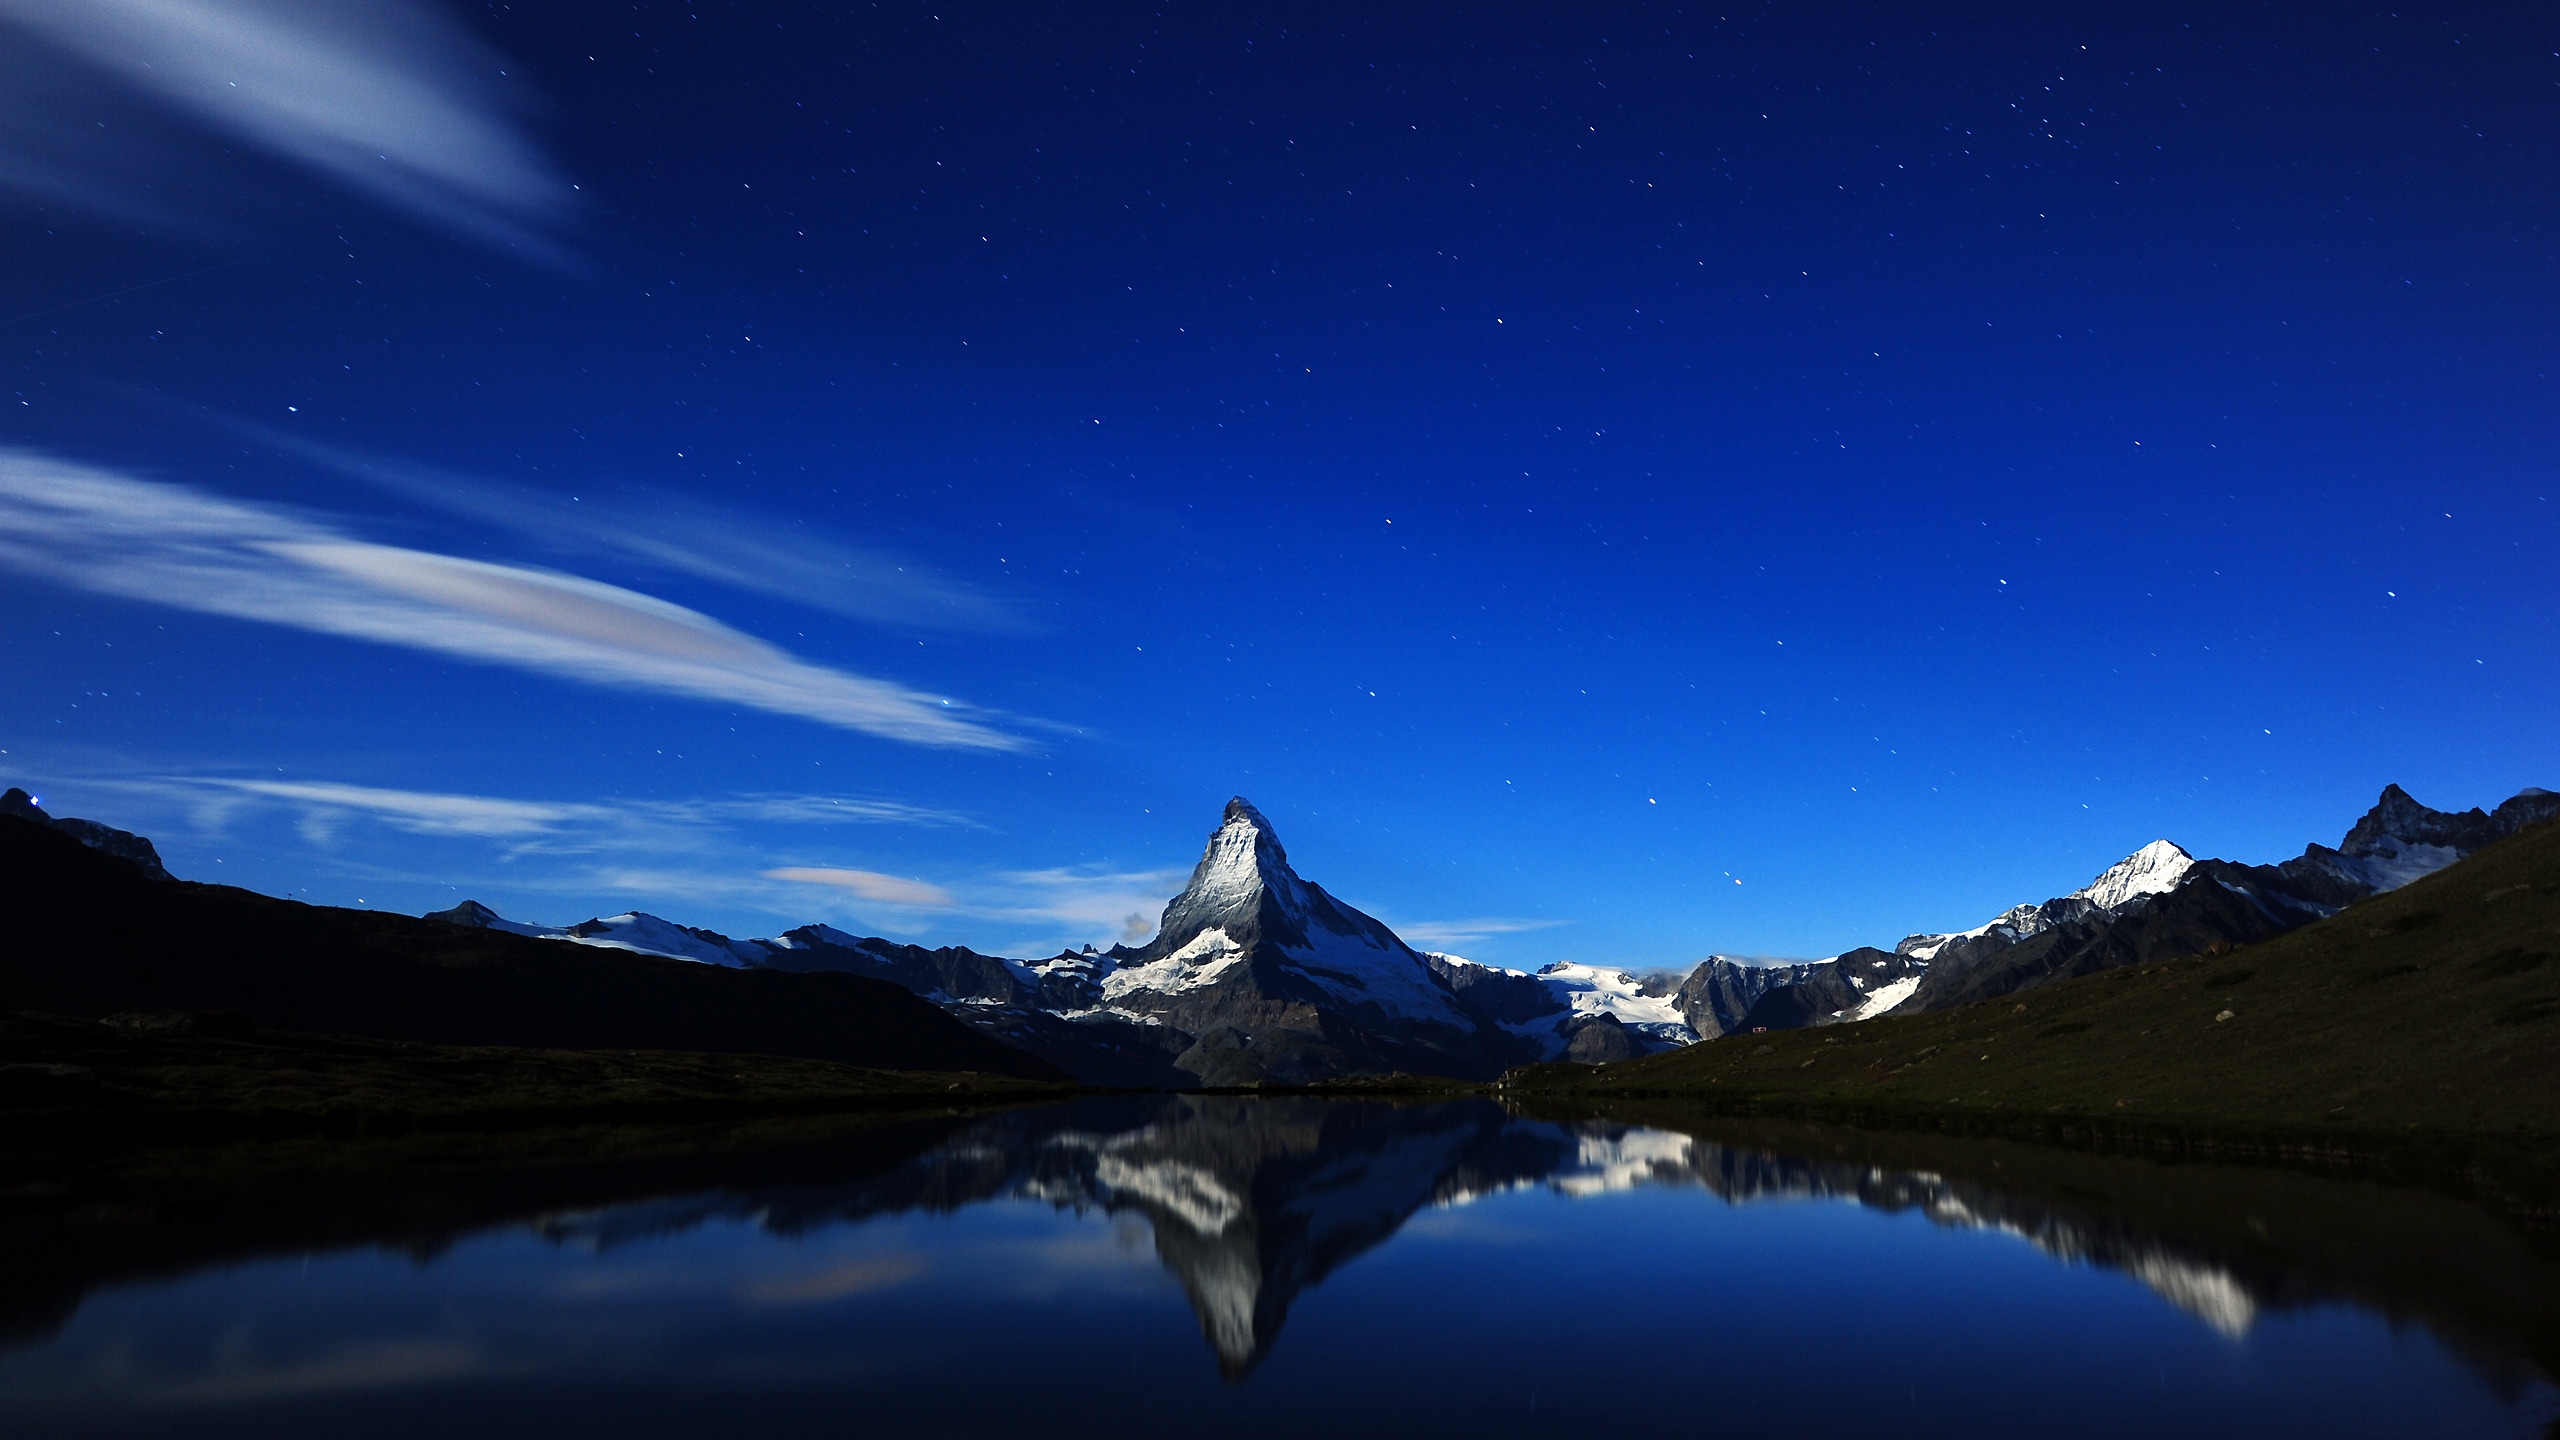 Matterhorn Midnight Reflection for 2560x1440 HDTV resolution